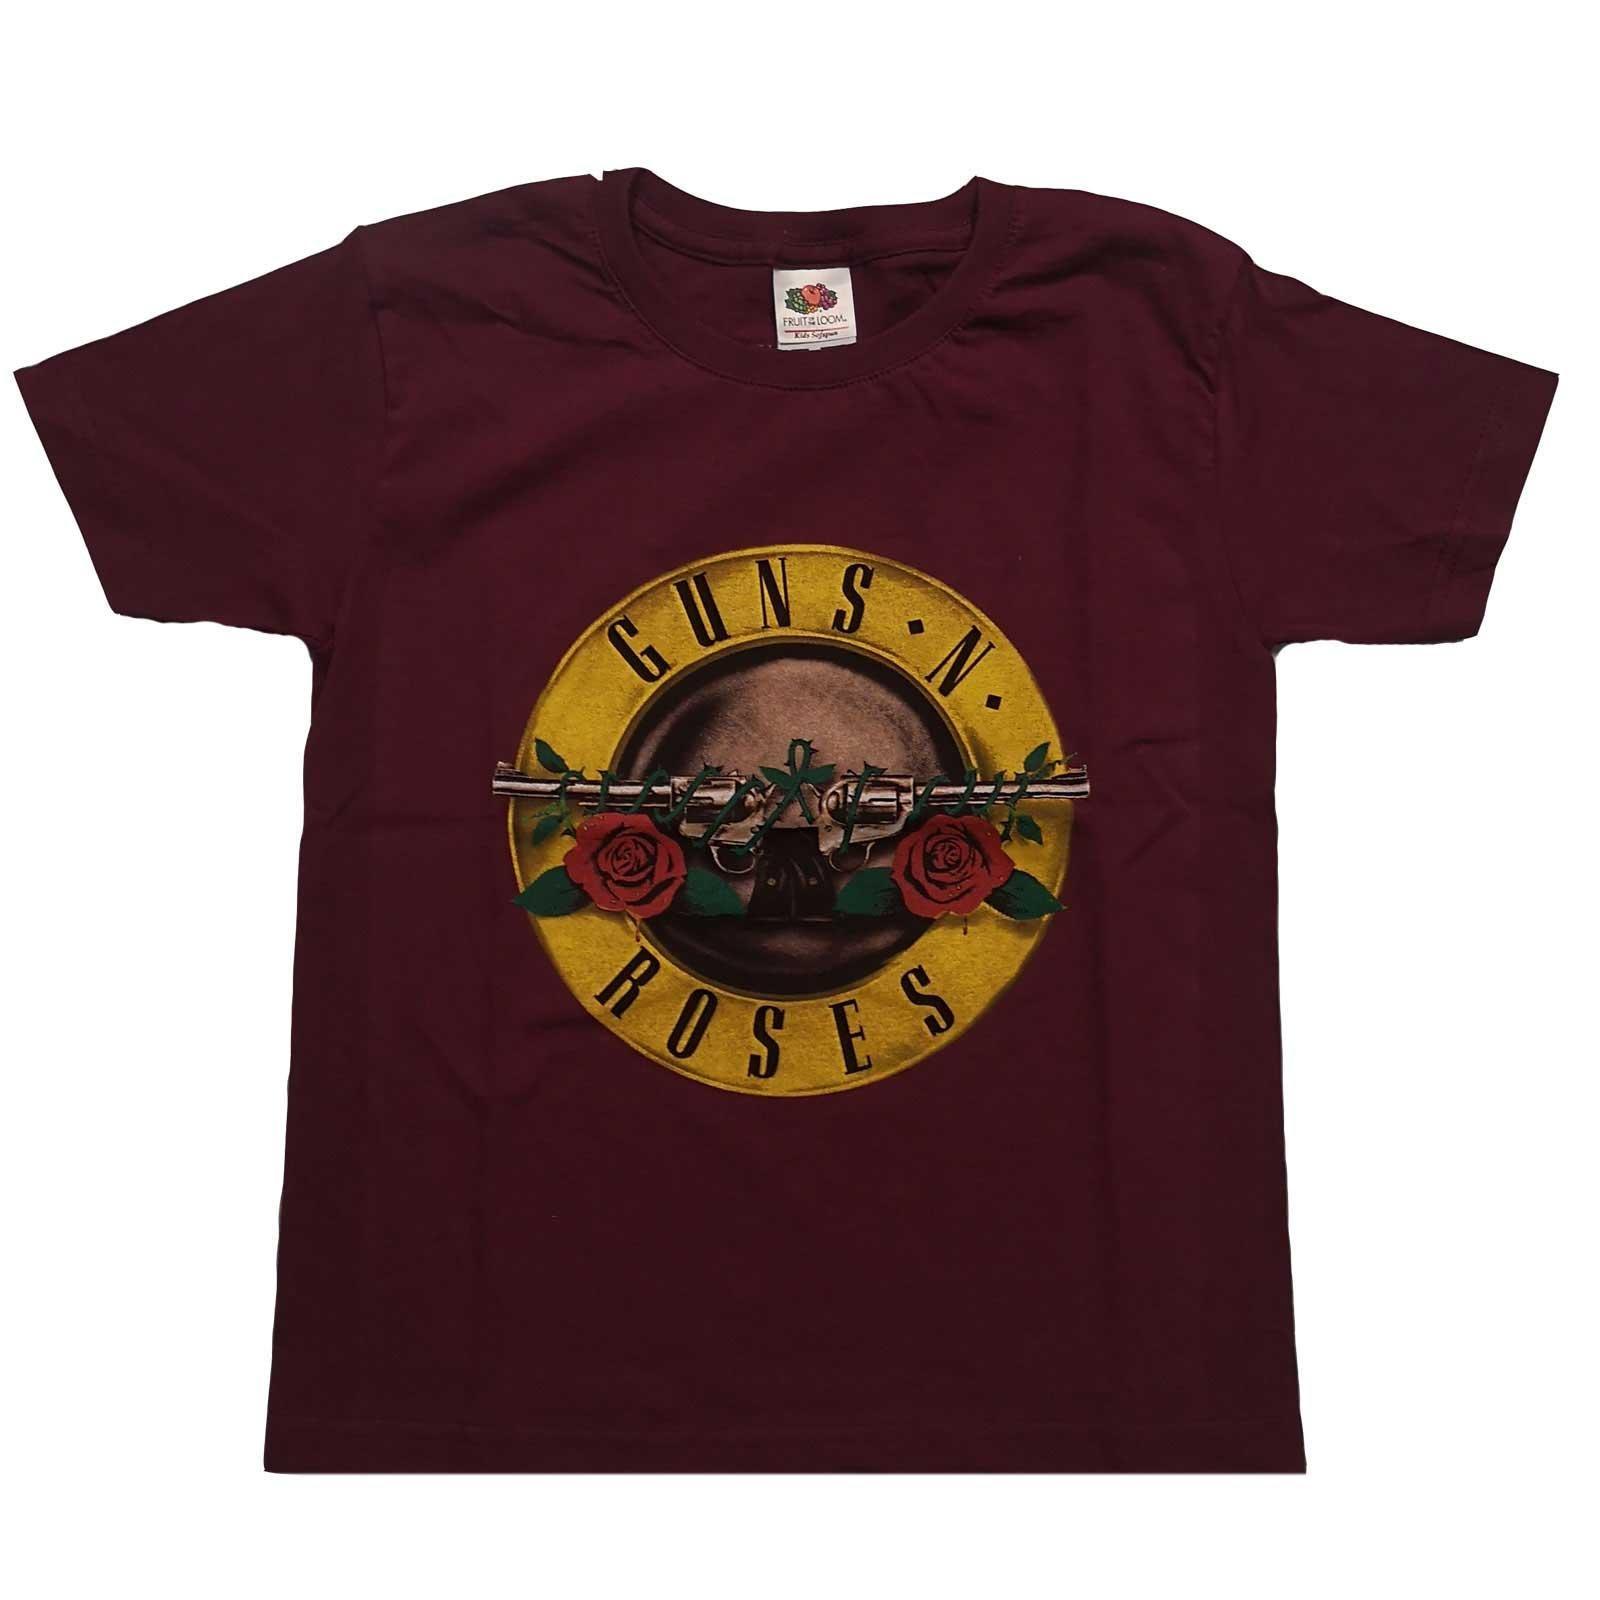 Tshirt Jungen Bordeaux 158/164 von Guns N Roses